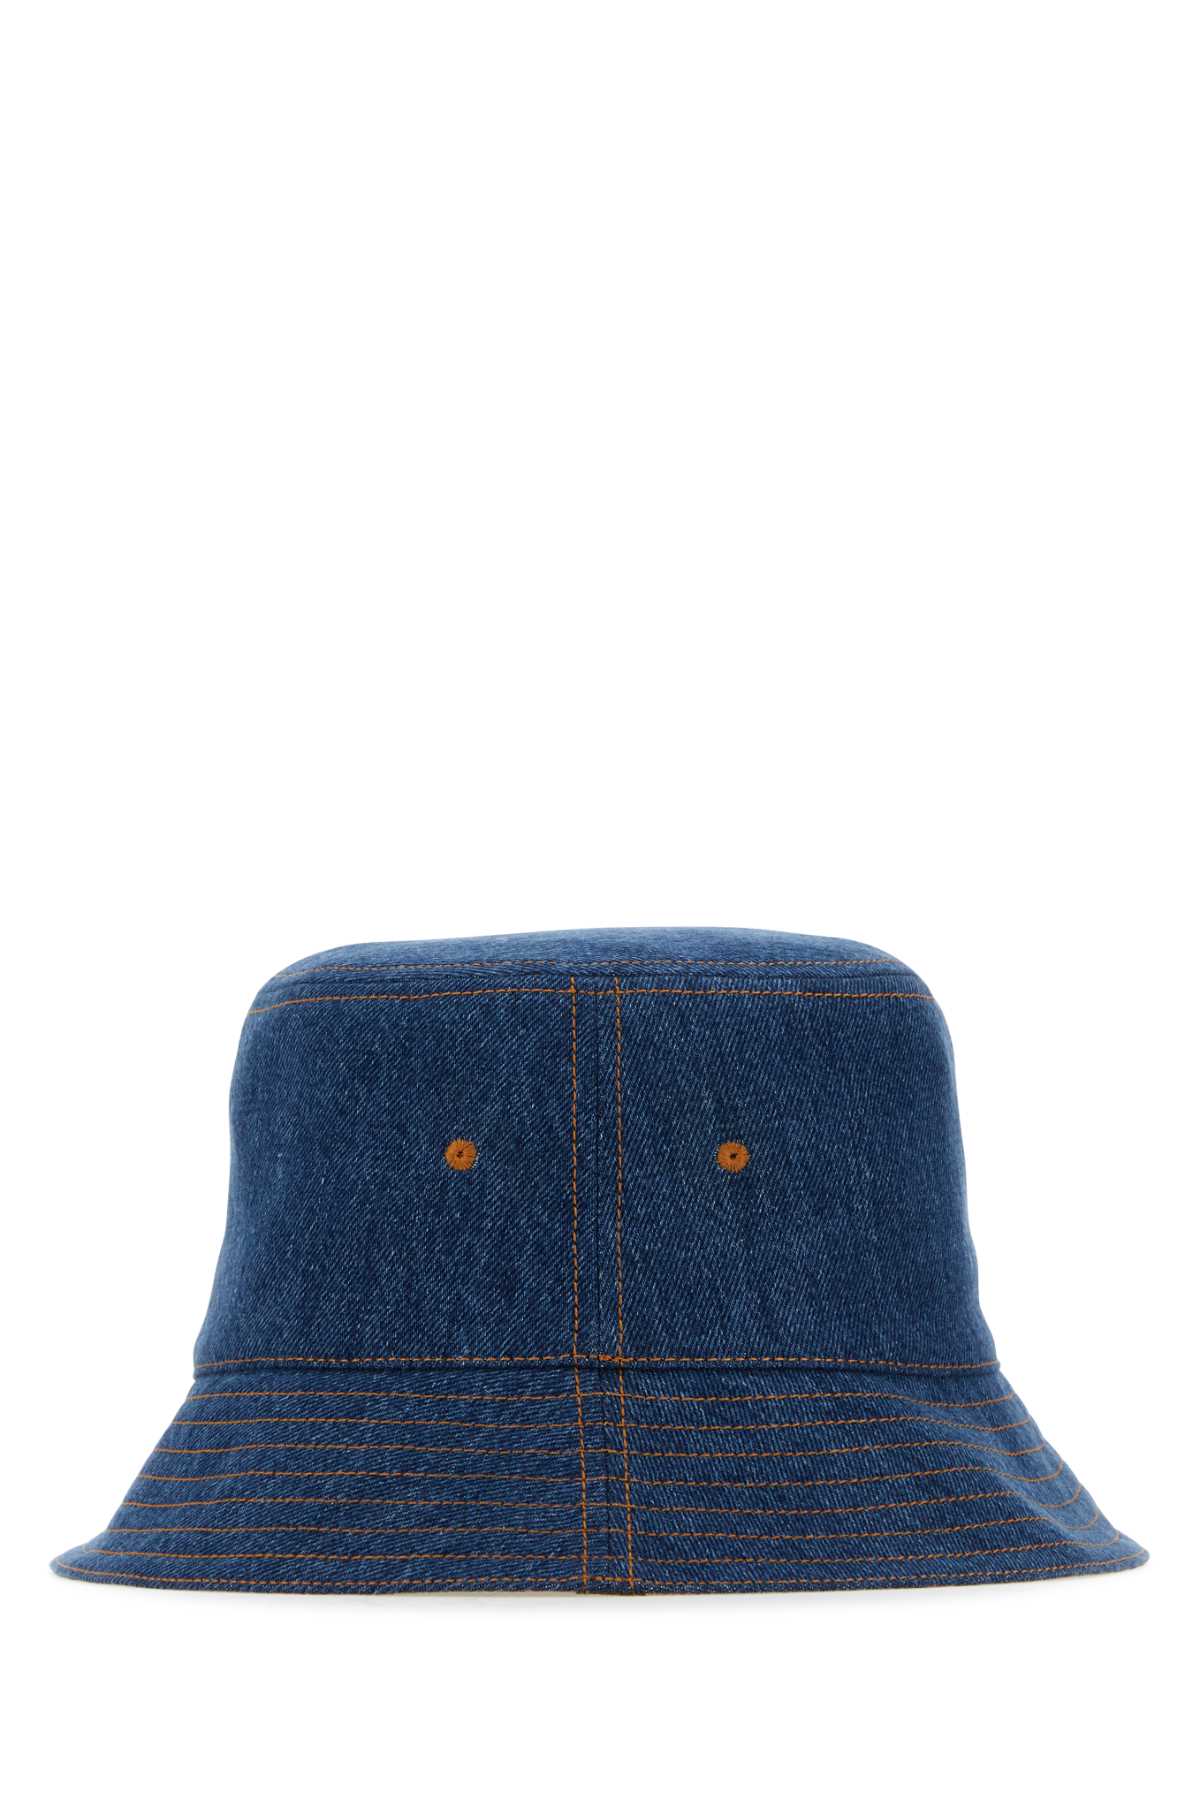 Burberry Denim Bucket Hat In Washedindigo